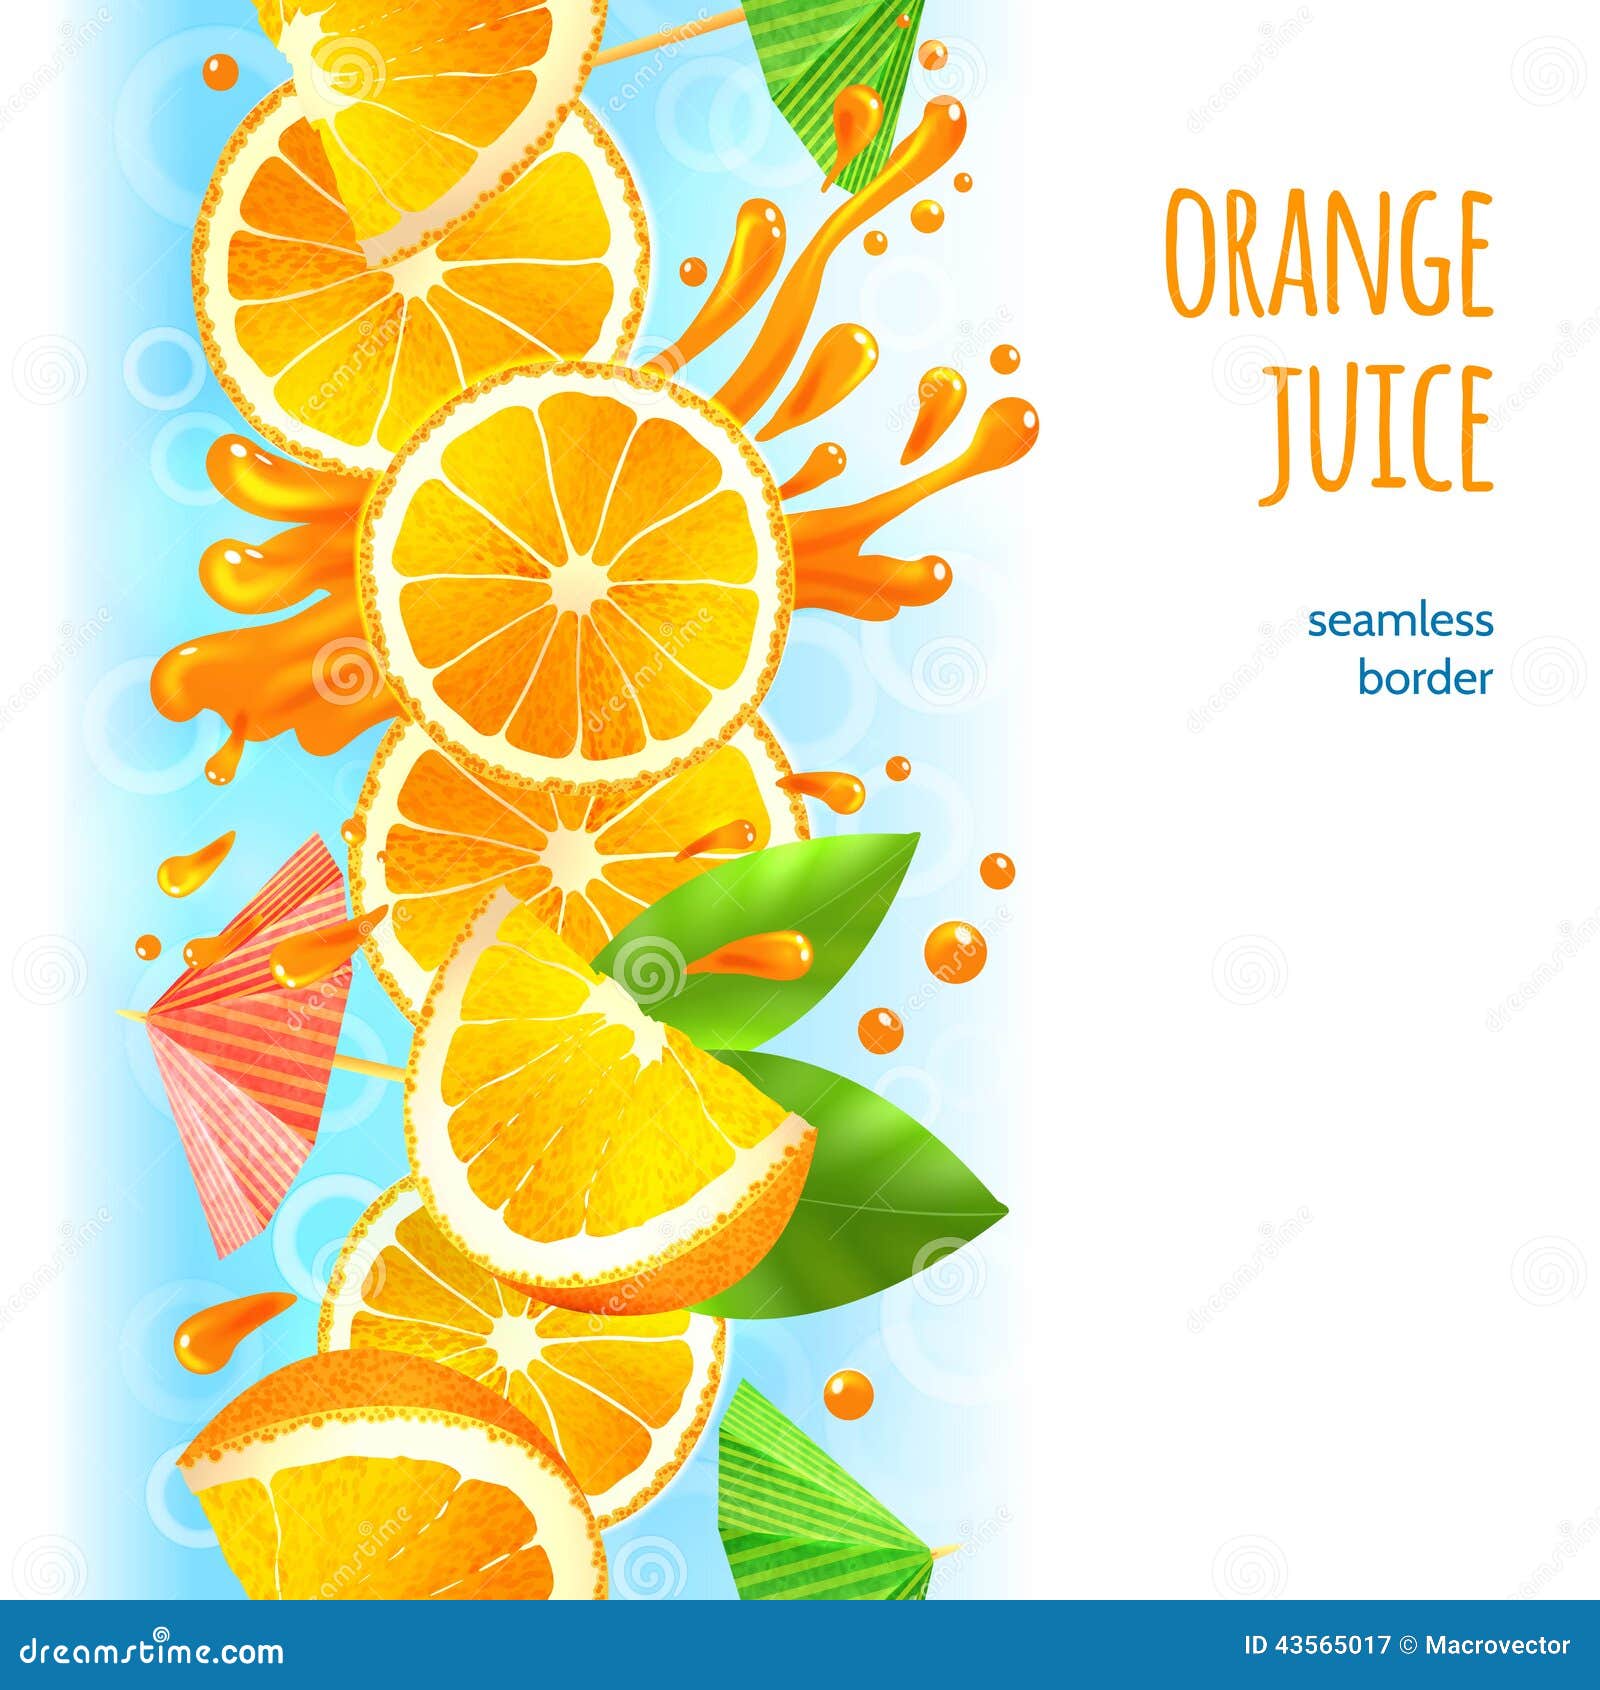 Orange juice border stock vector. Image of album ...